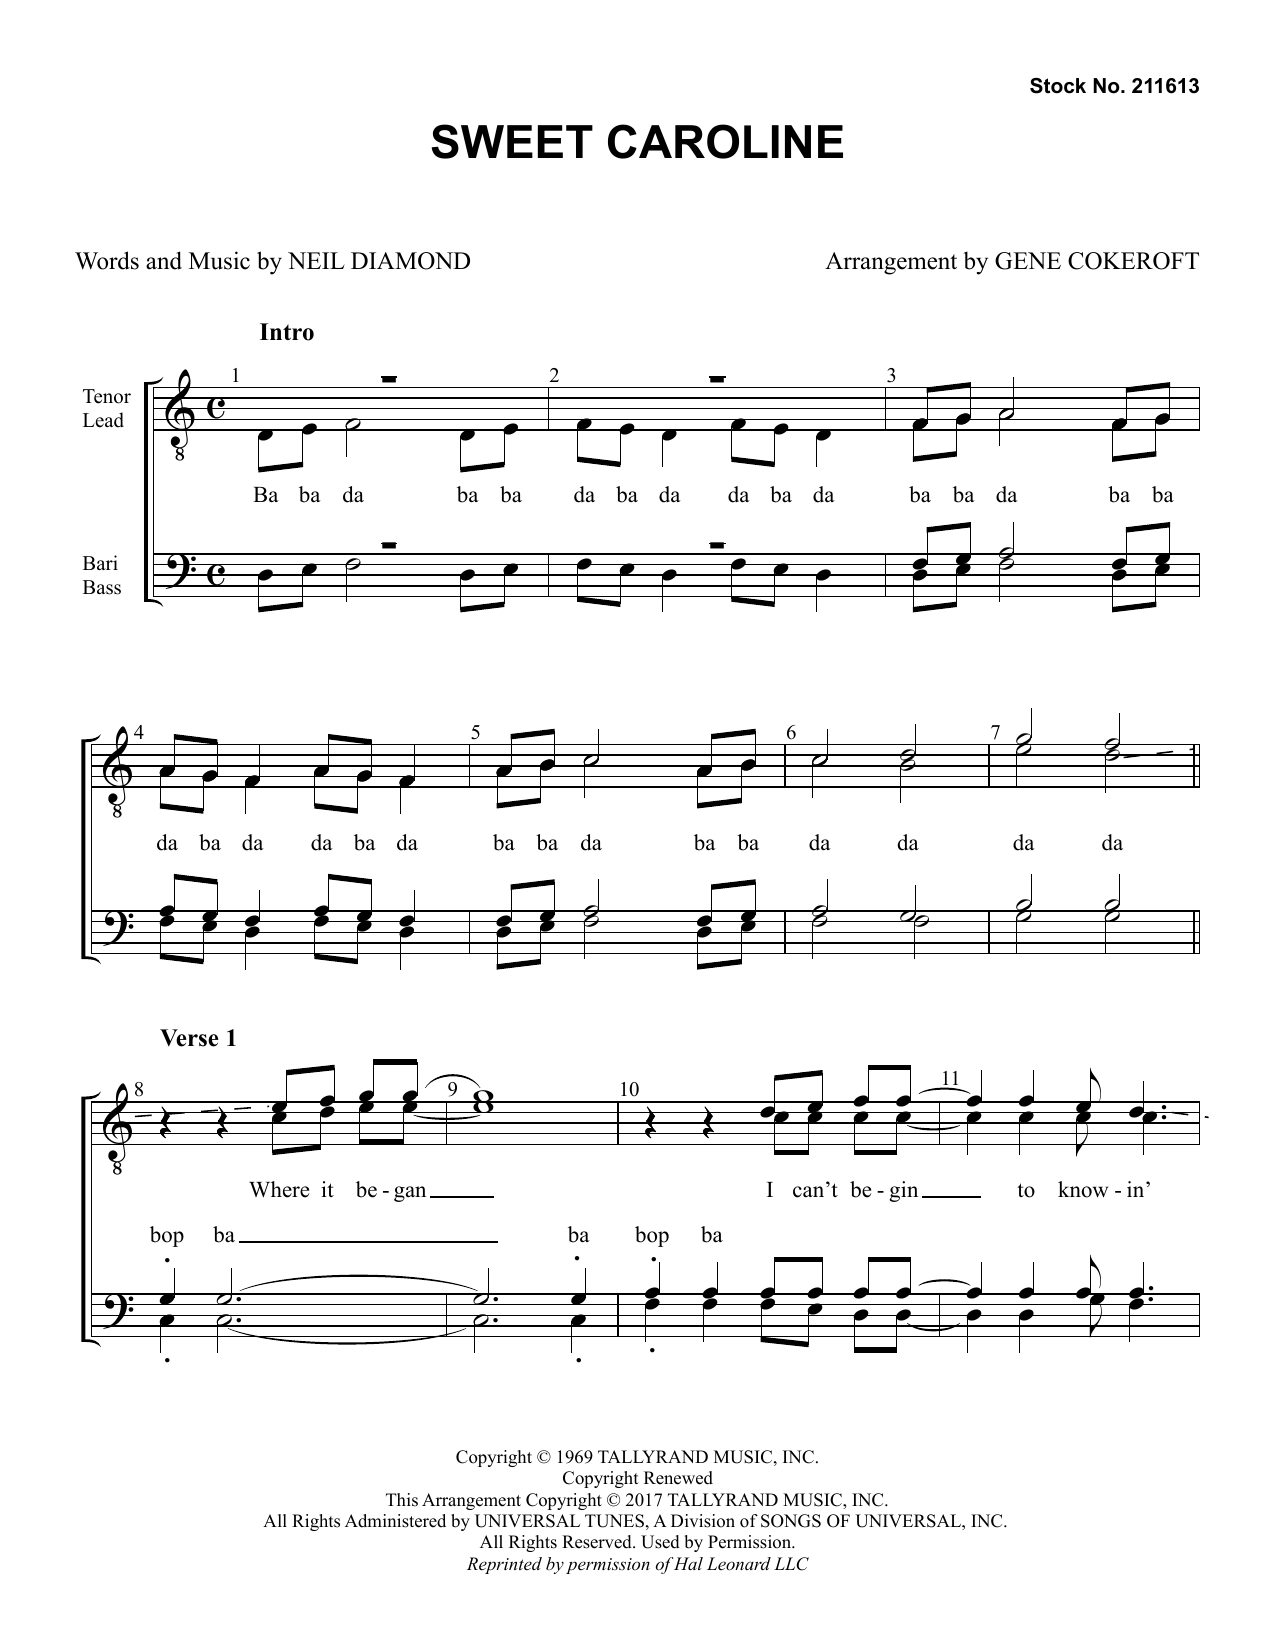 Neil Diamond Sweet Caroline (arr. Gene Cokeroft) Sheet Music Notes & Chords for TTBB Choir - Download or Print PDF